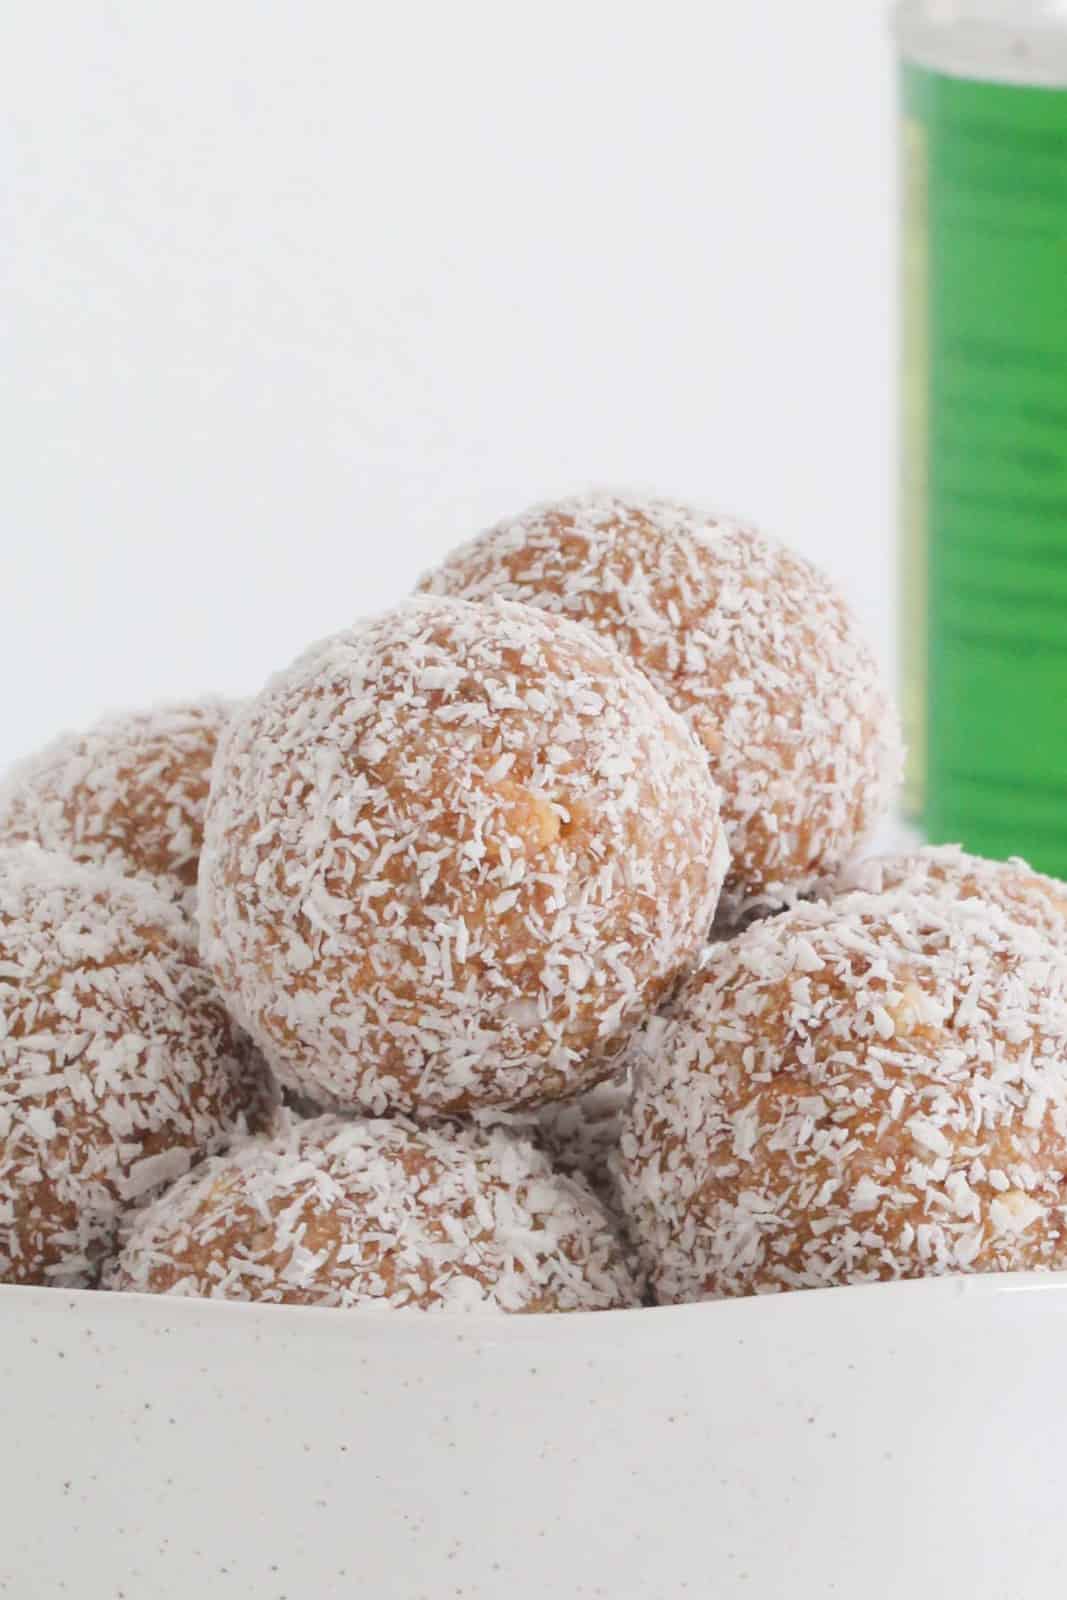 A close up of coconut coated Milo balls.